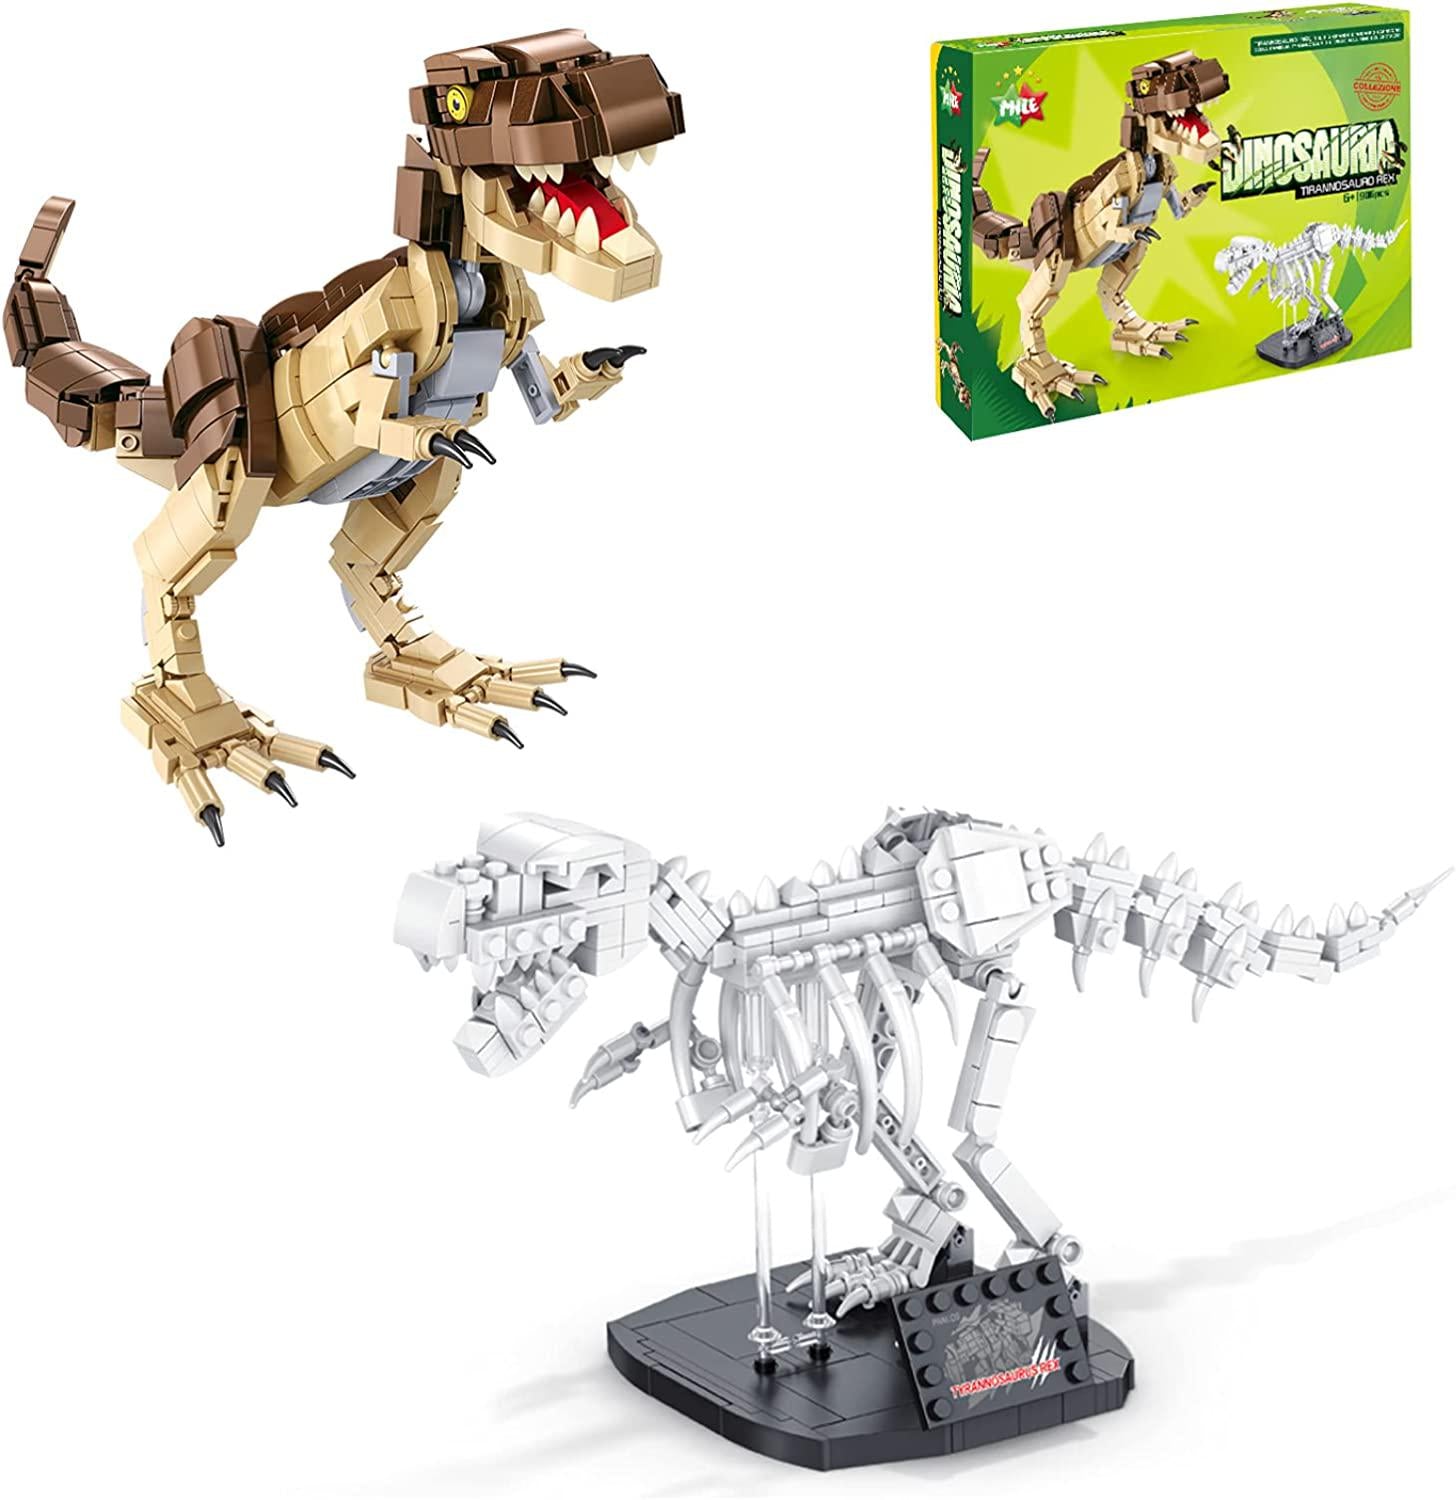 MILESTAR, Milestar Dinosaur Building Blocks Toys STEM Building Toy with Fossils Bricks Set for Kids Boys Girls Gifts Age 6 7 8 9 10 ( 906 Pieces )